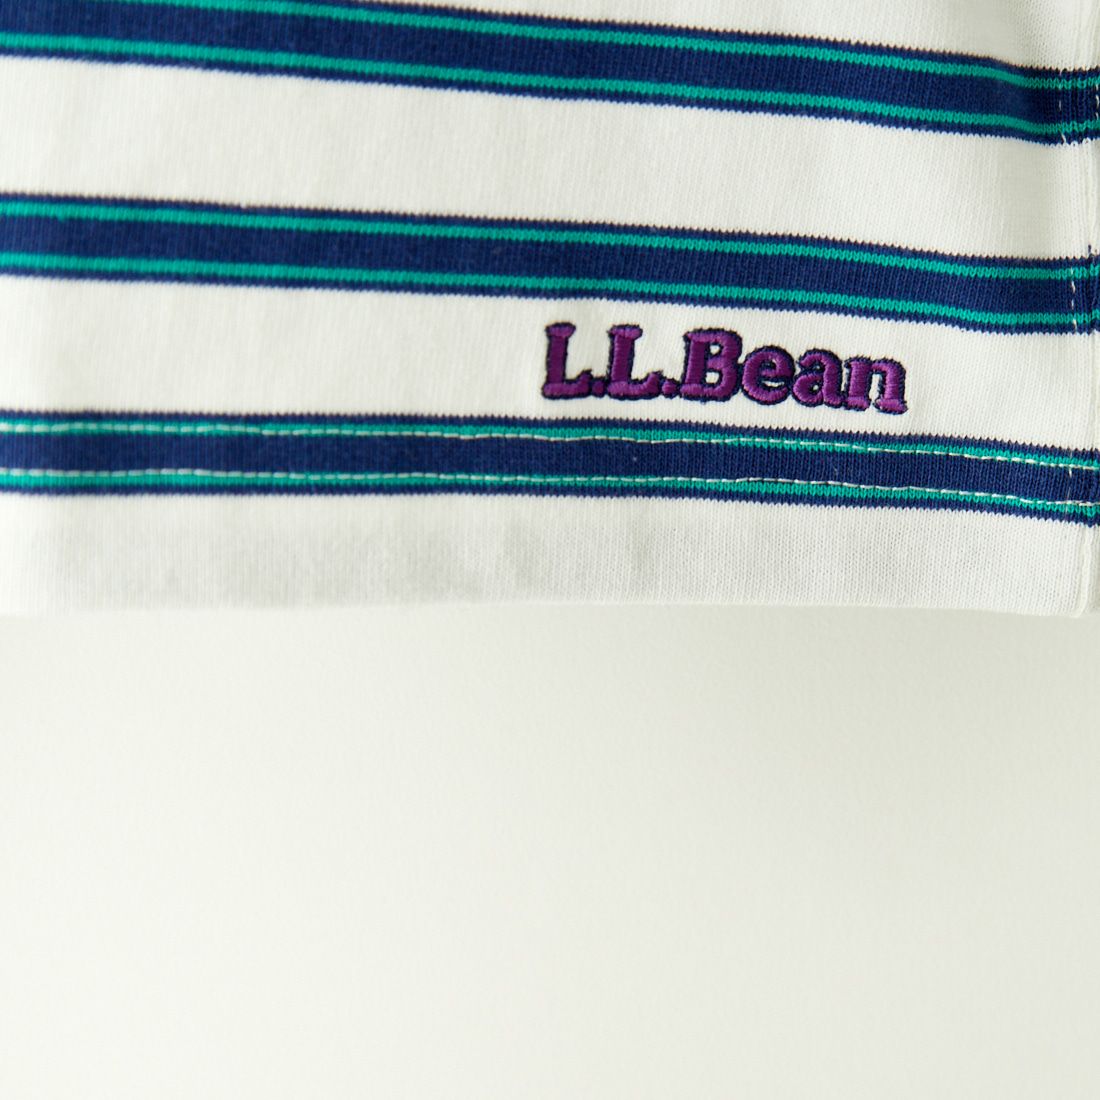 L.L.BEAN [エルエルビーン] Union ショートスリーブボーダーTシャツ [4275-6063] 90 WHT/RYL